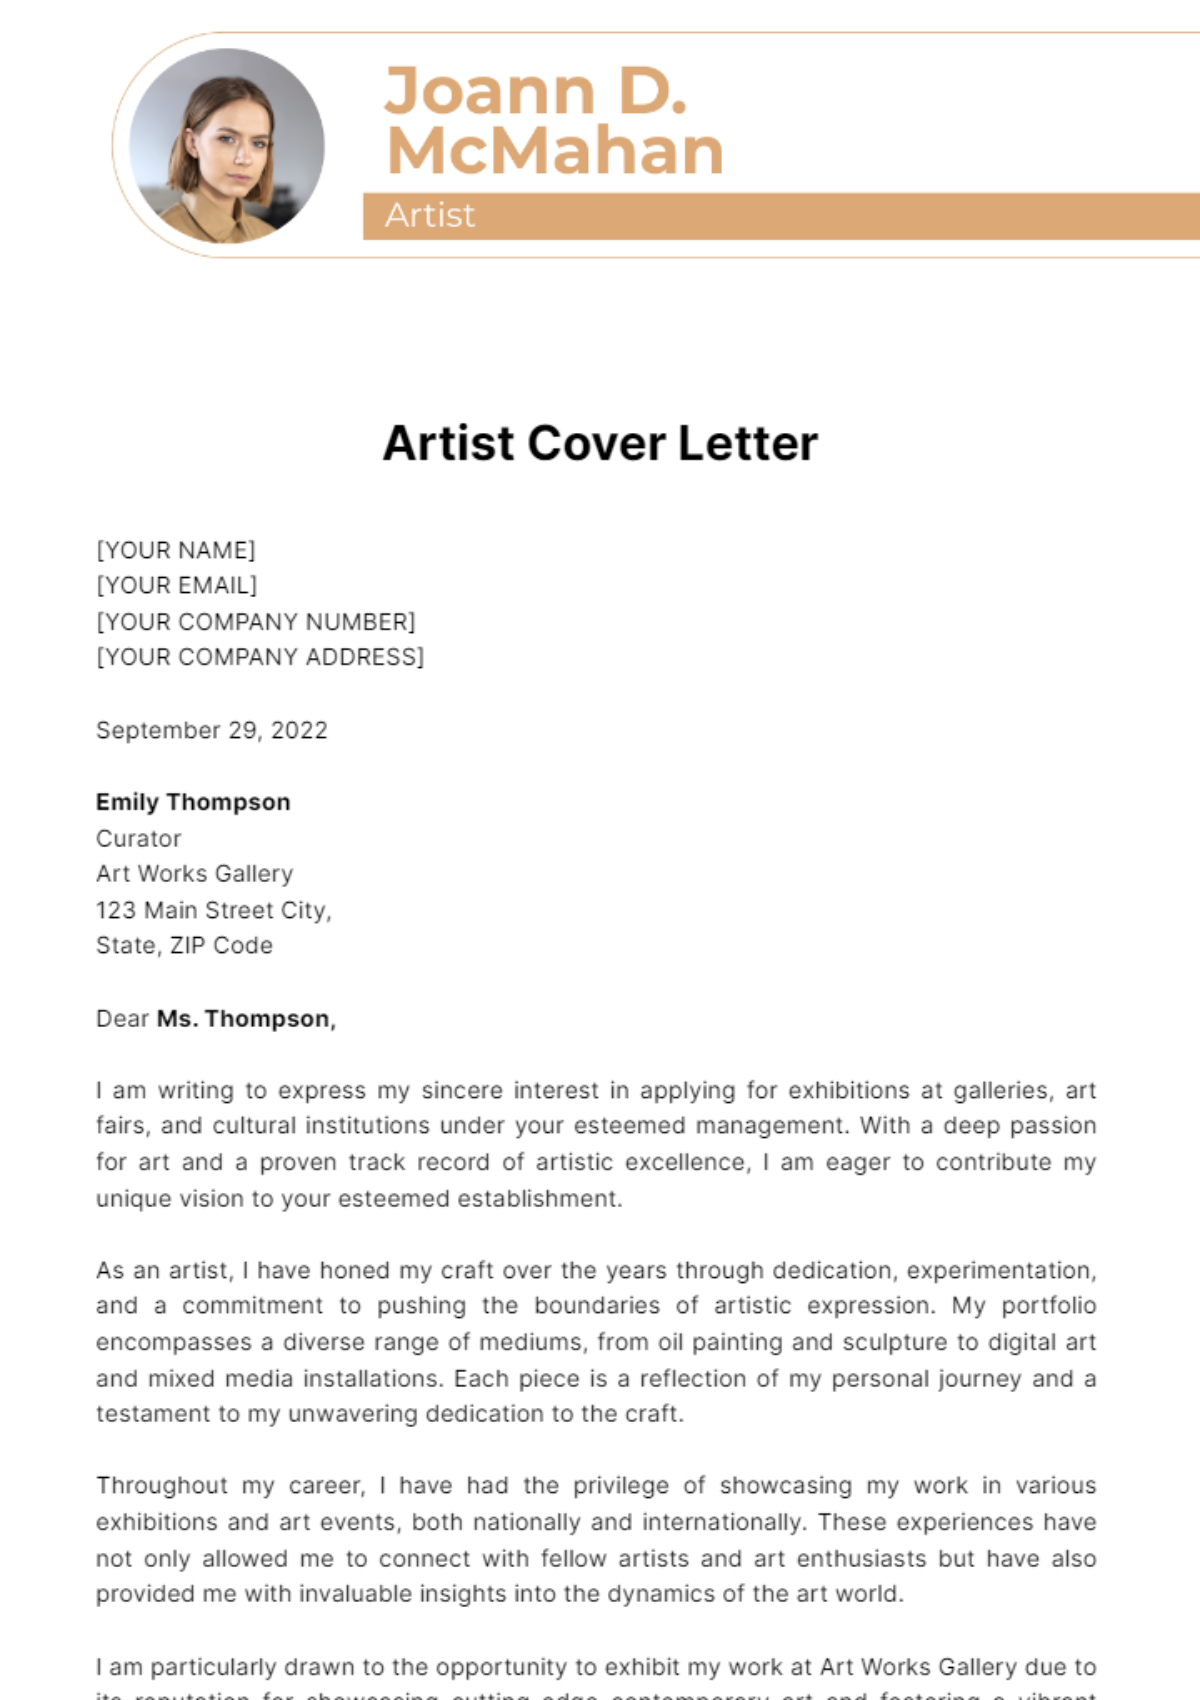 Artist Cover Letter Template